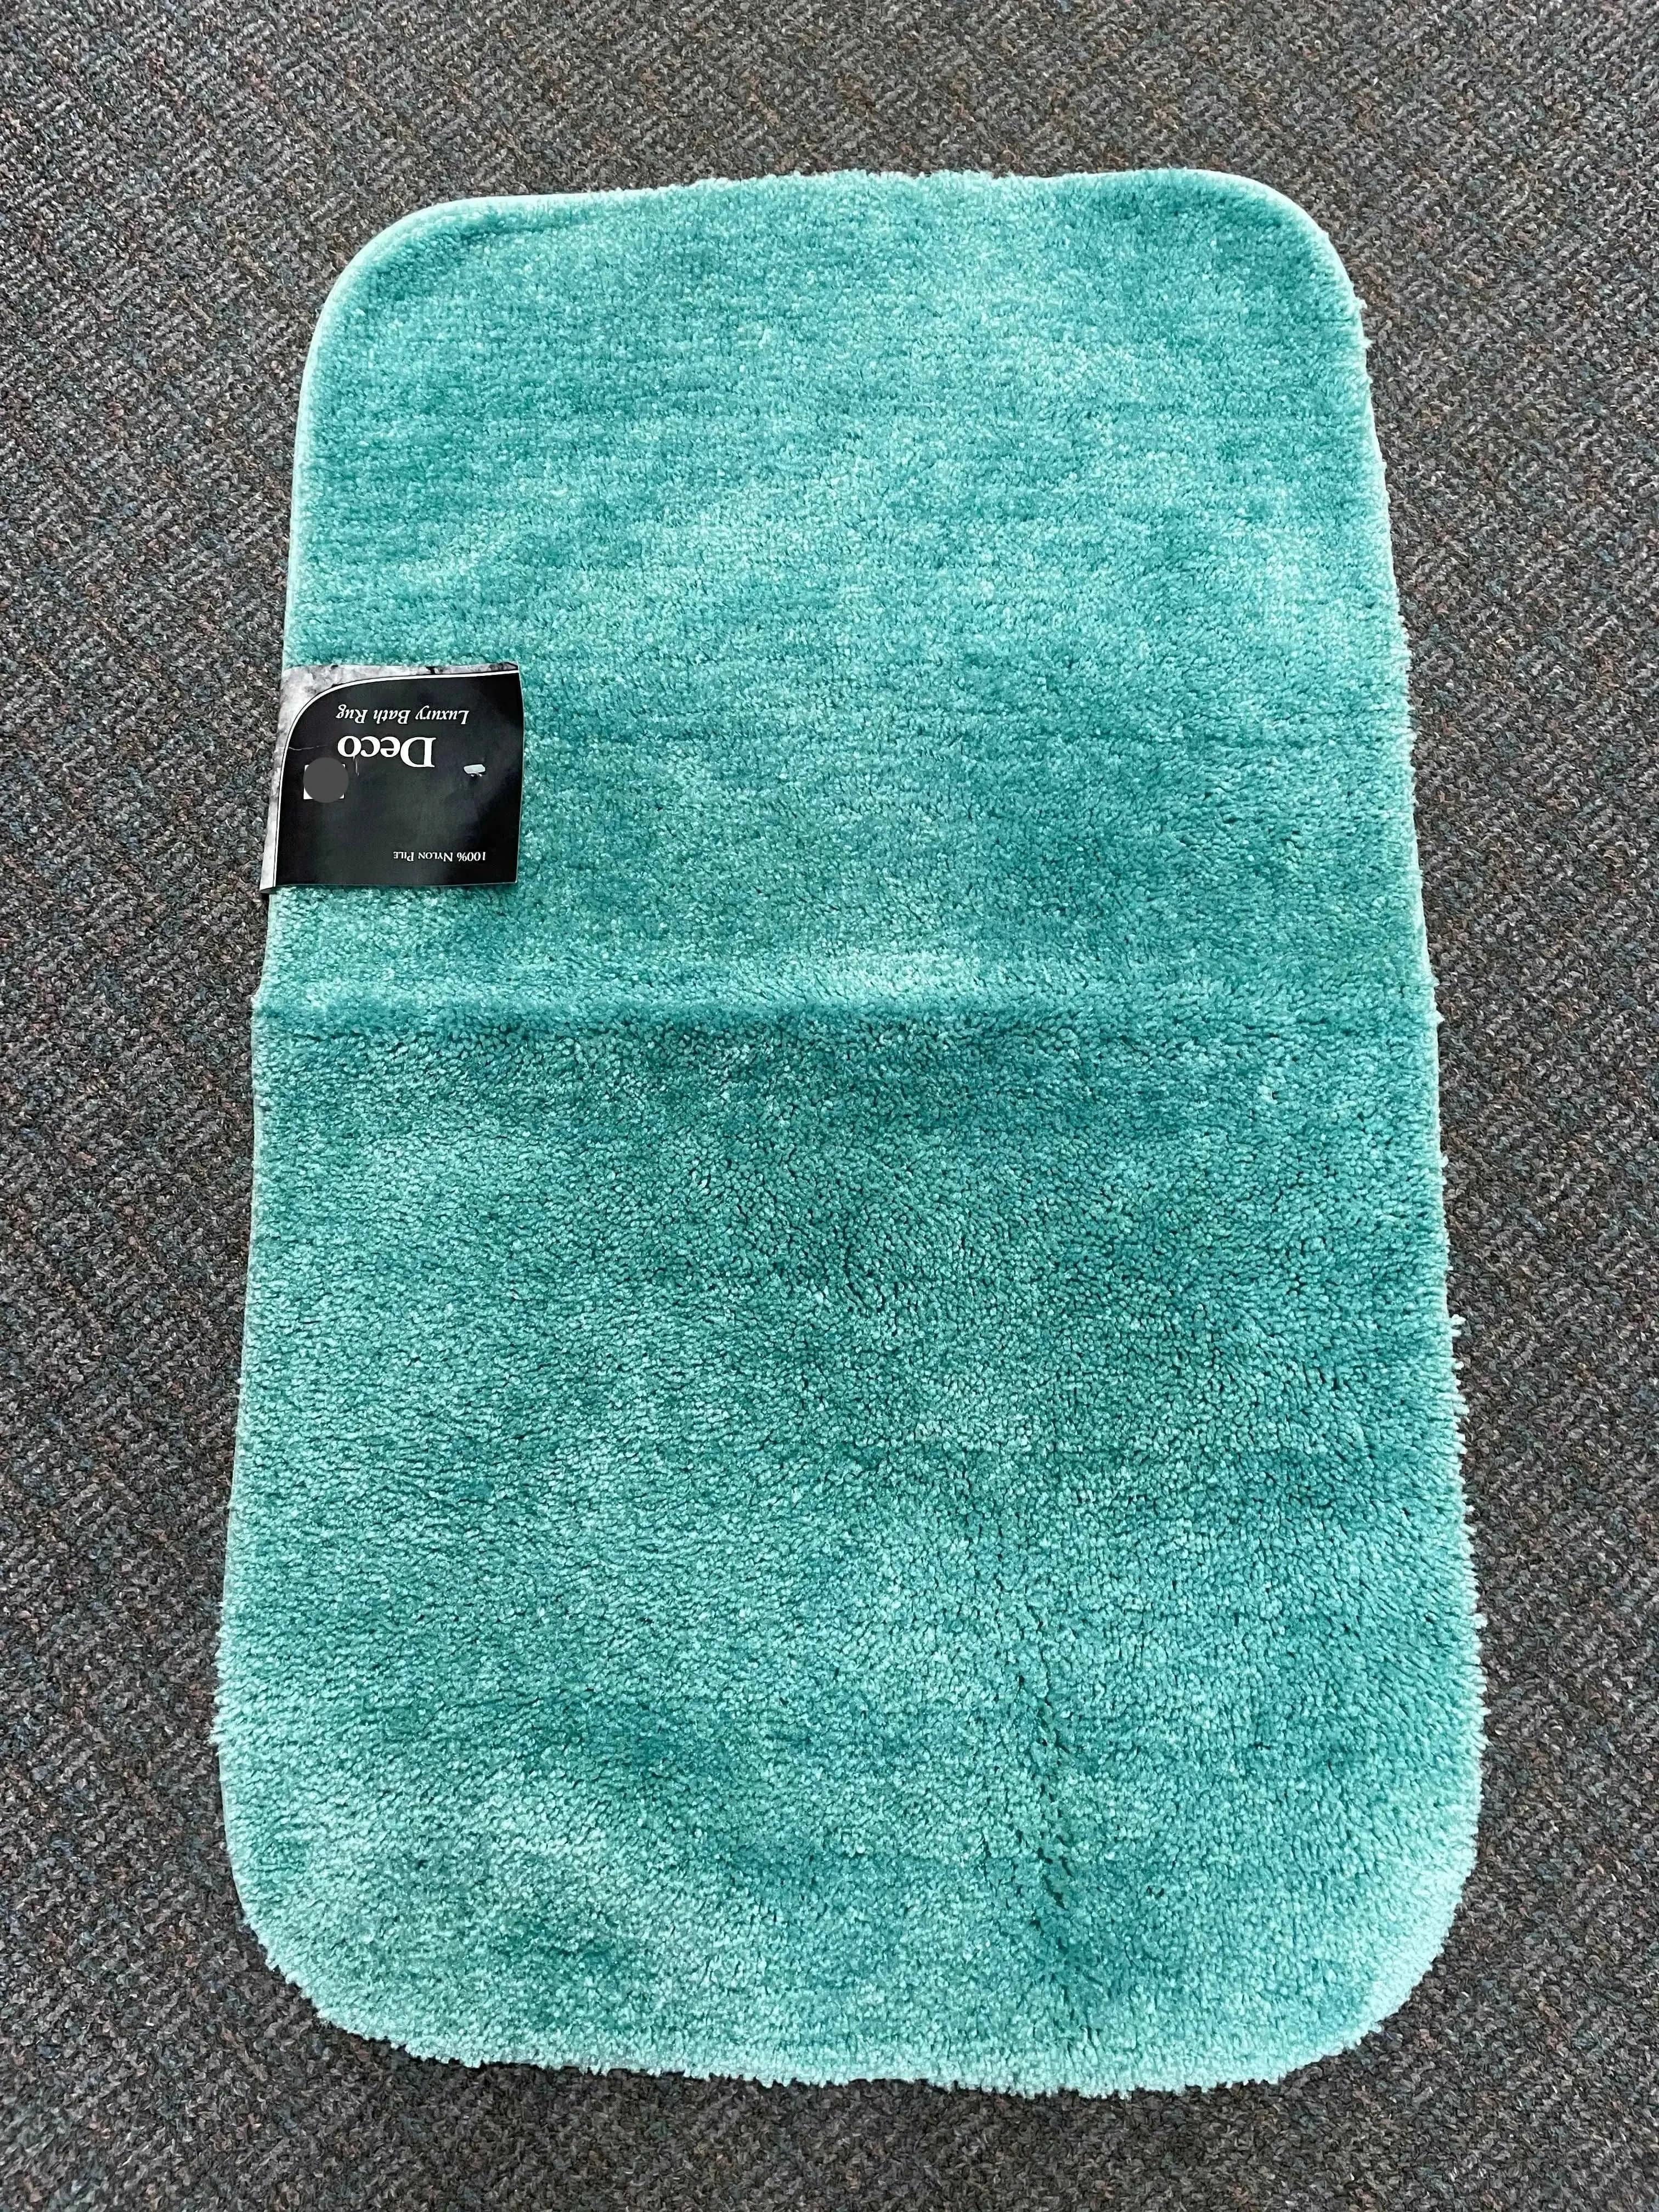 Linen World bathroom rugs Seafoam / 21x34 Thick bathroom rugs